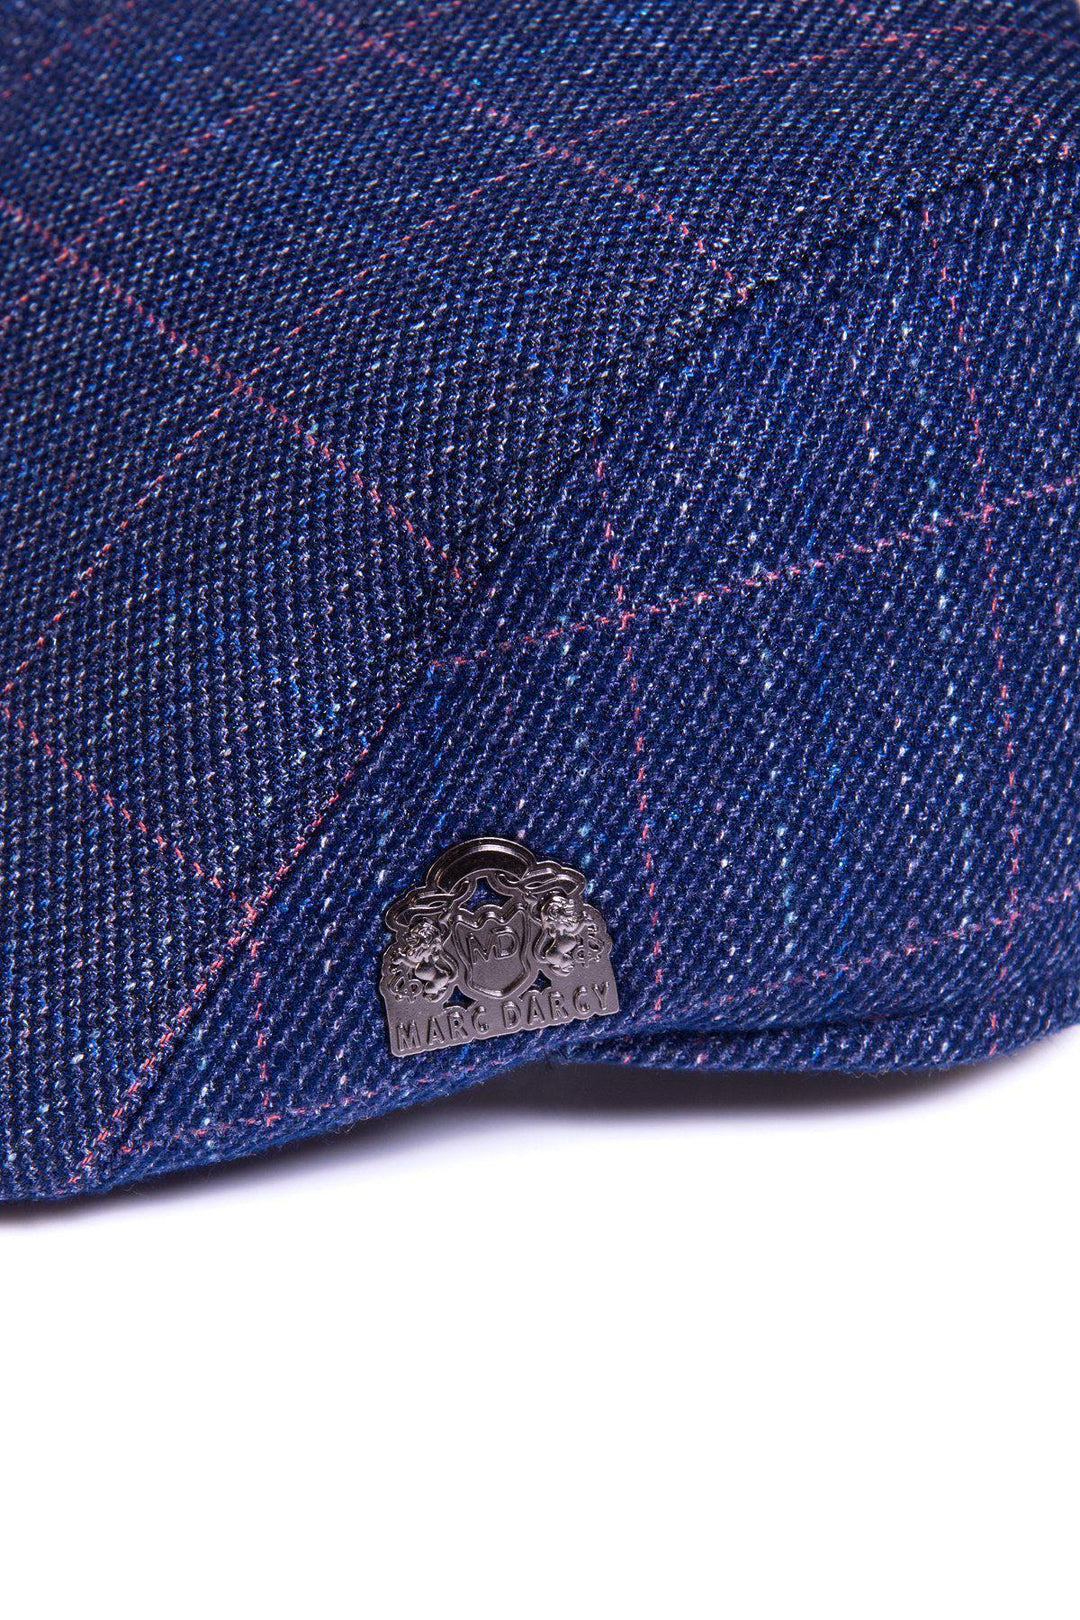 HARRY - Indigo Tweed Check Flat Cap